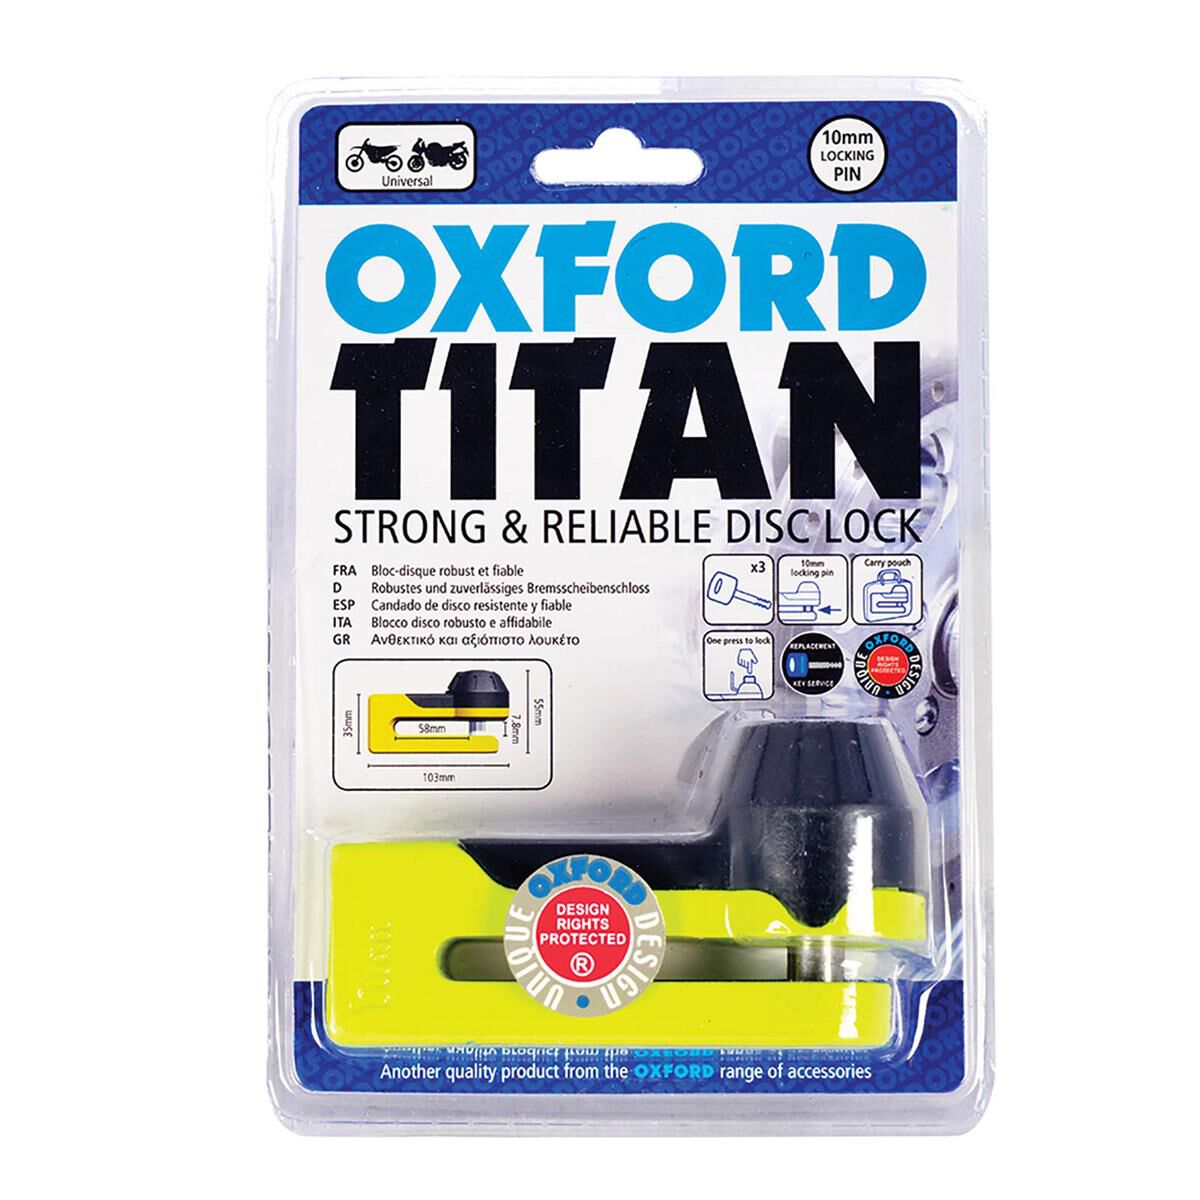 OXFORD TITAN 10MM PIN DISC LOCK YELLOW INCL. POUCH, , scaau_hi-res